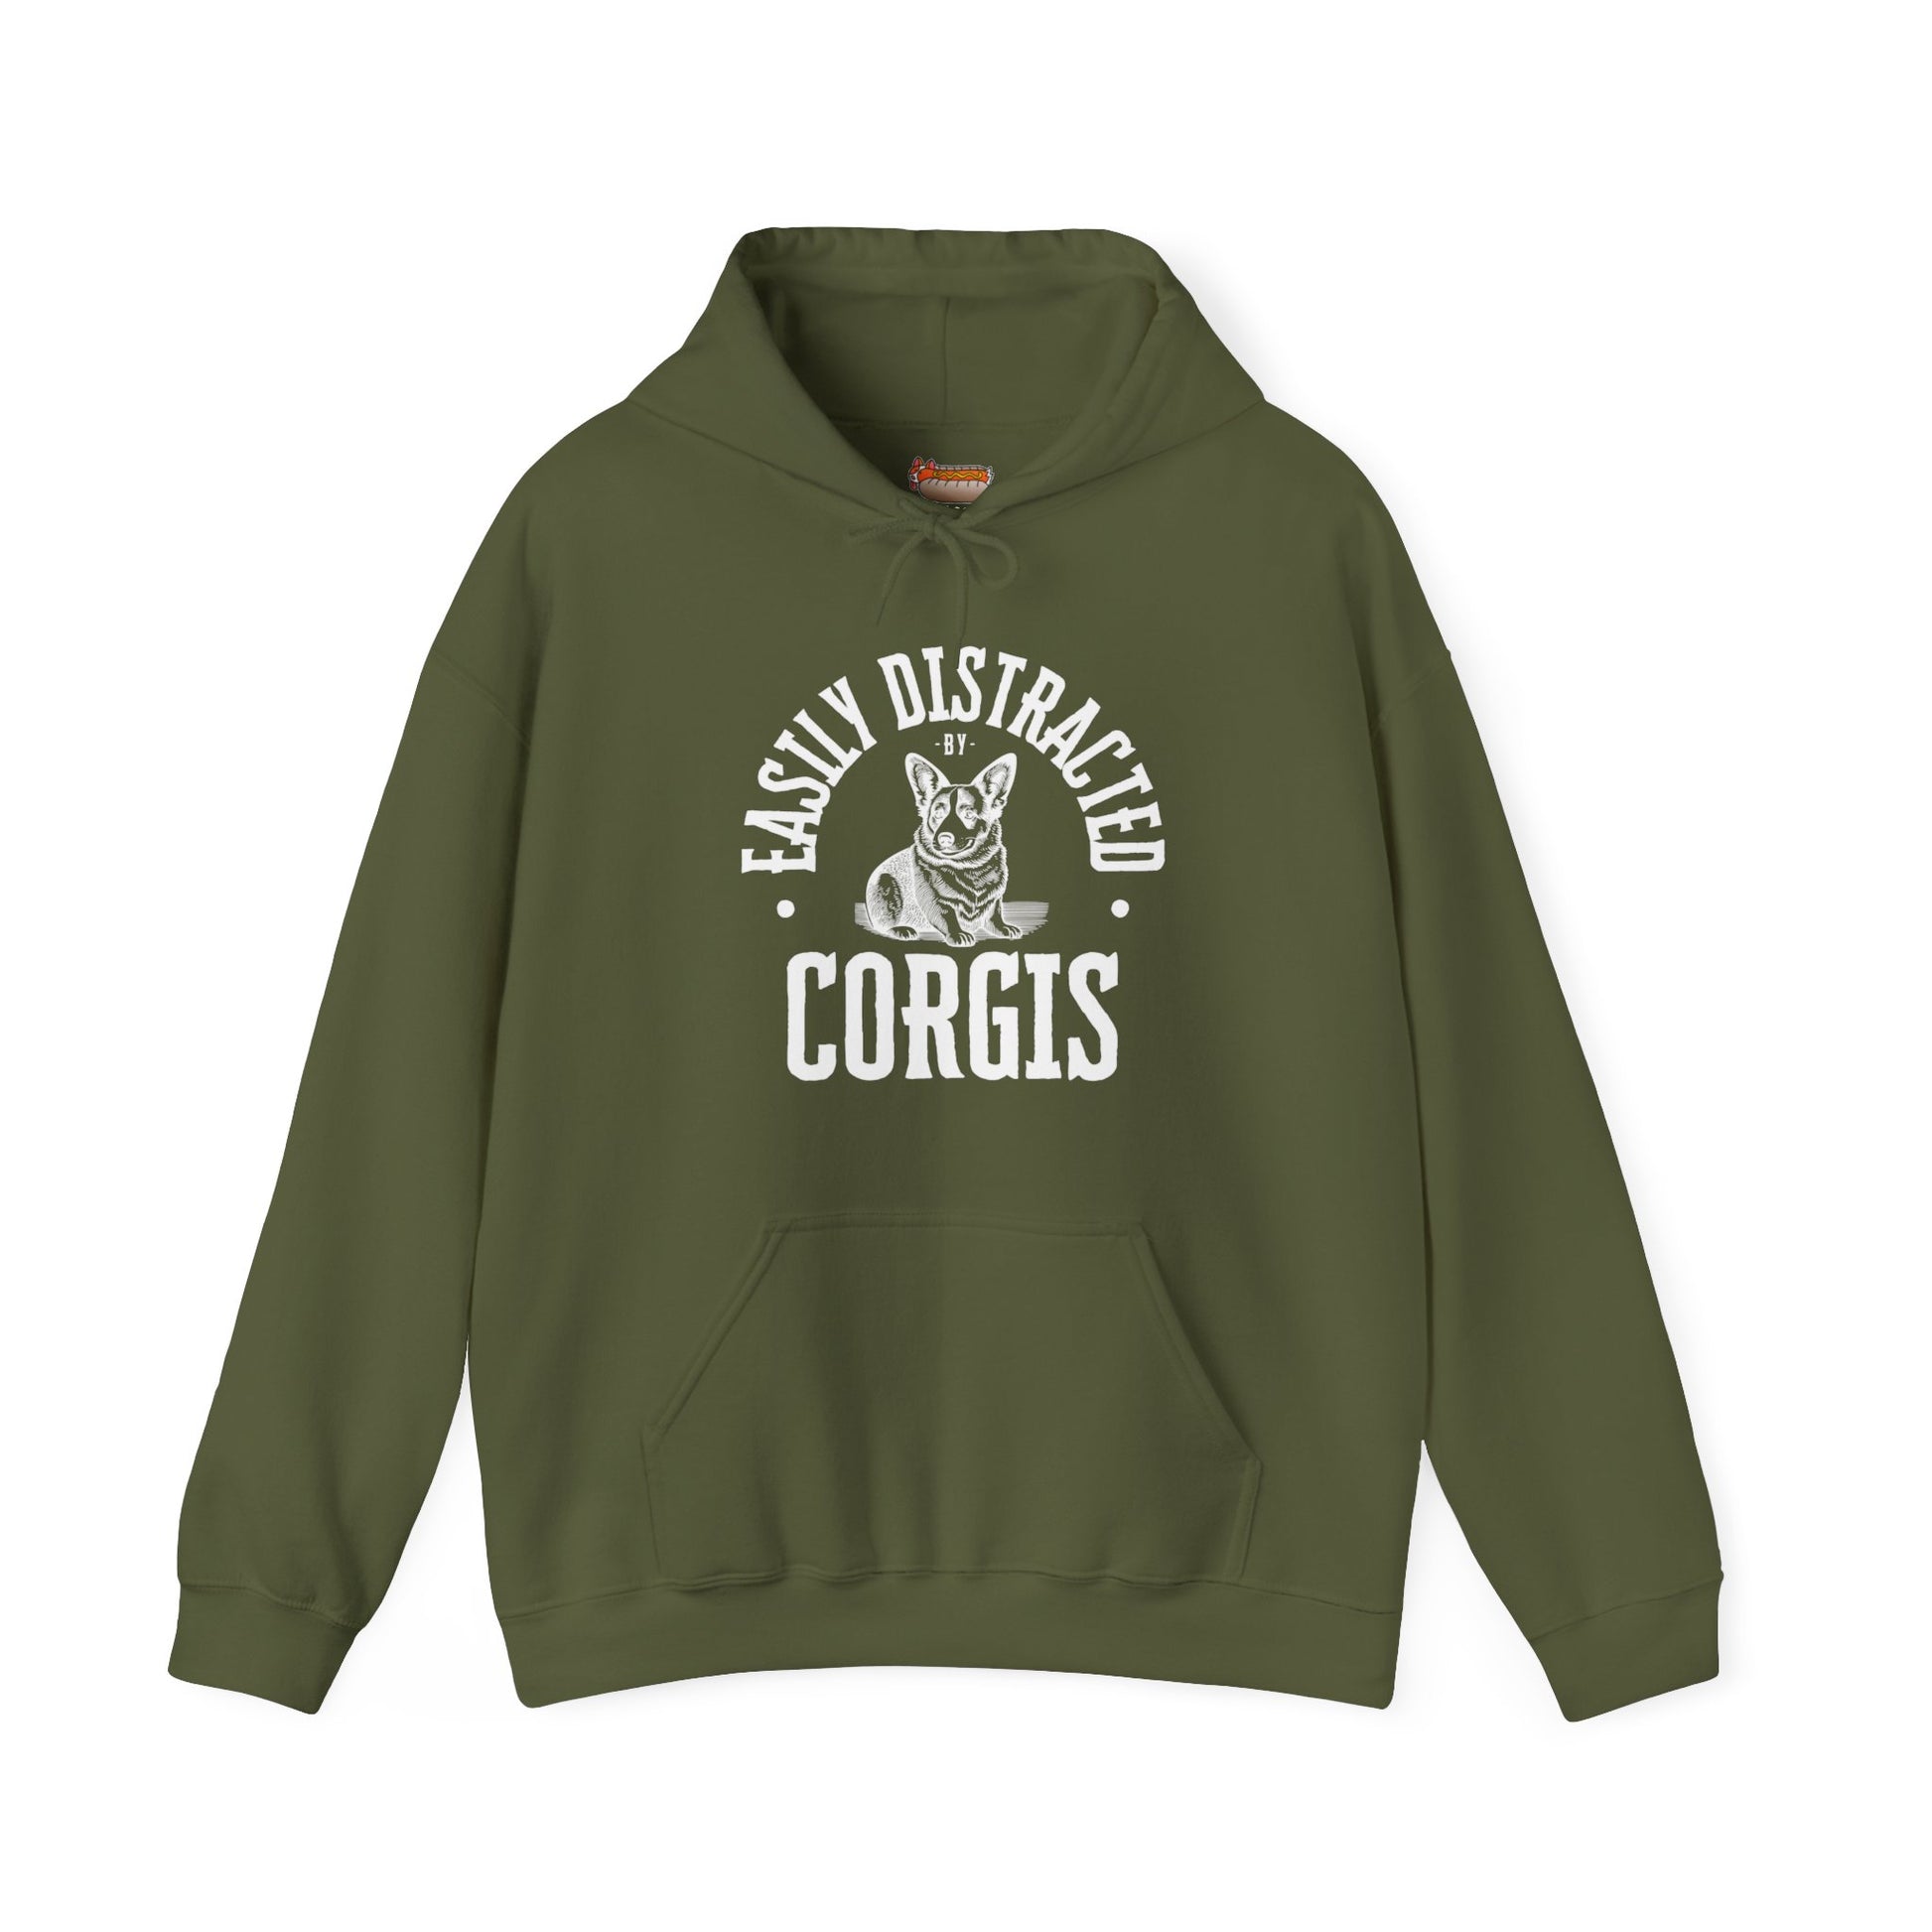 green dark forest olive army corgi hoodie easily distracted women men sweatshirt shirt